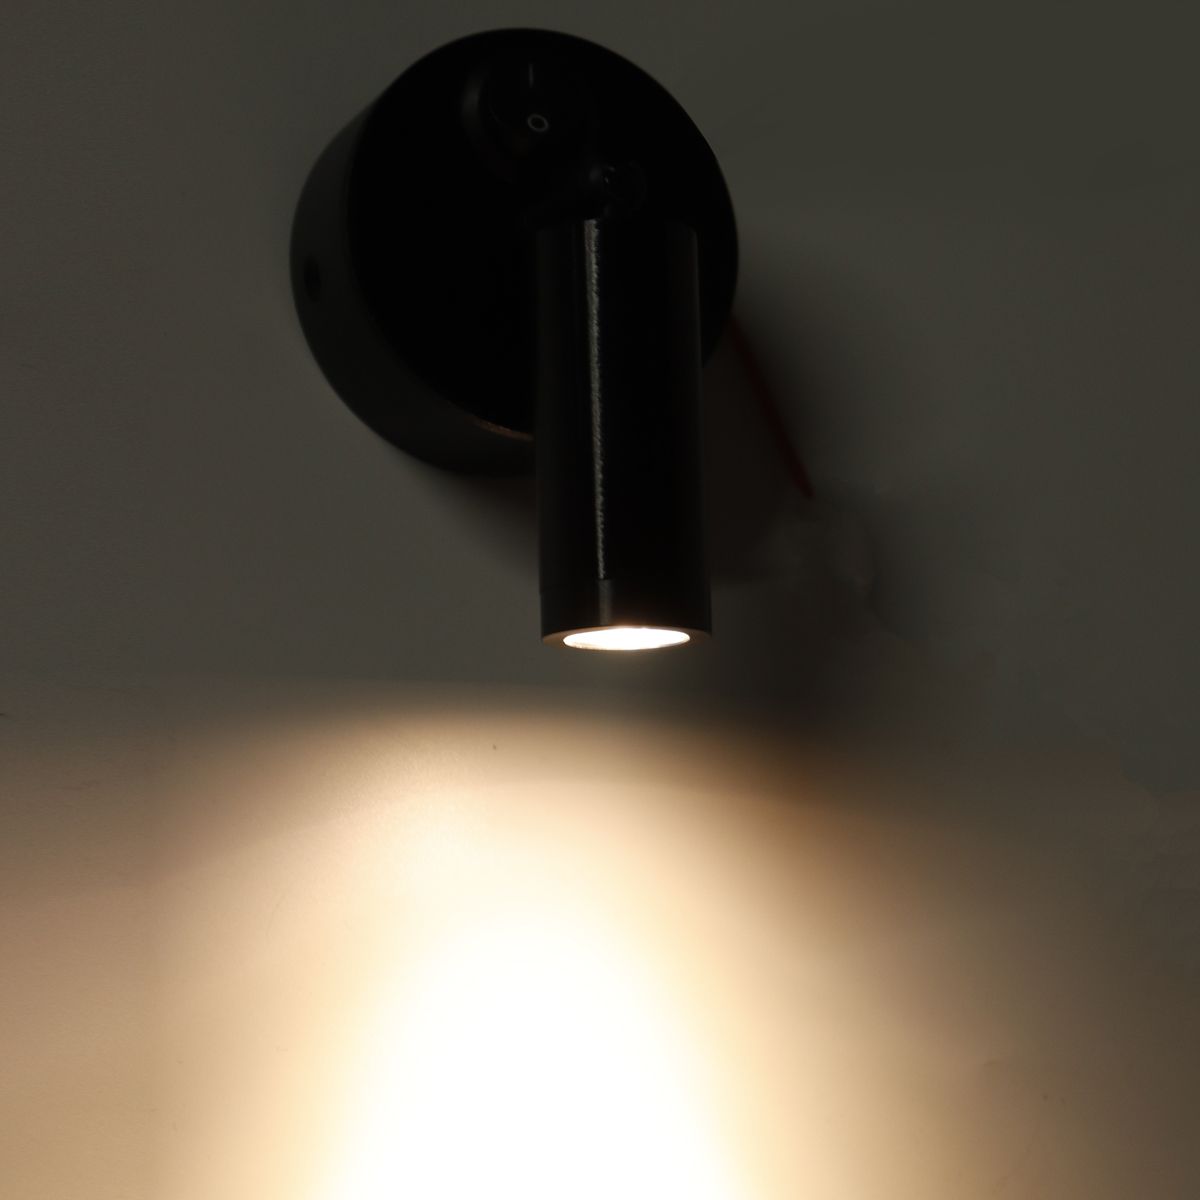 LED-Wall-Spotlight-Reading-Light--RV-Boat-Caravan-Motorhome-Bedside-Wall-Lamp-White-WarmWhite-Light-1544873